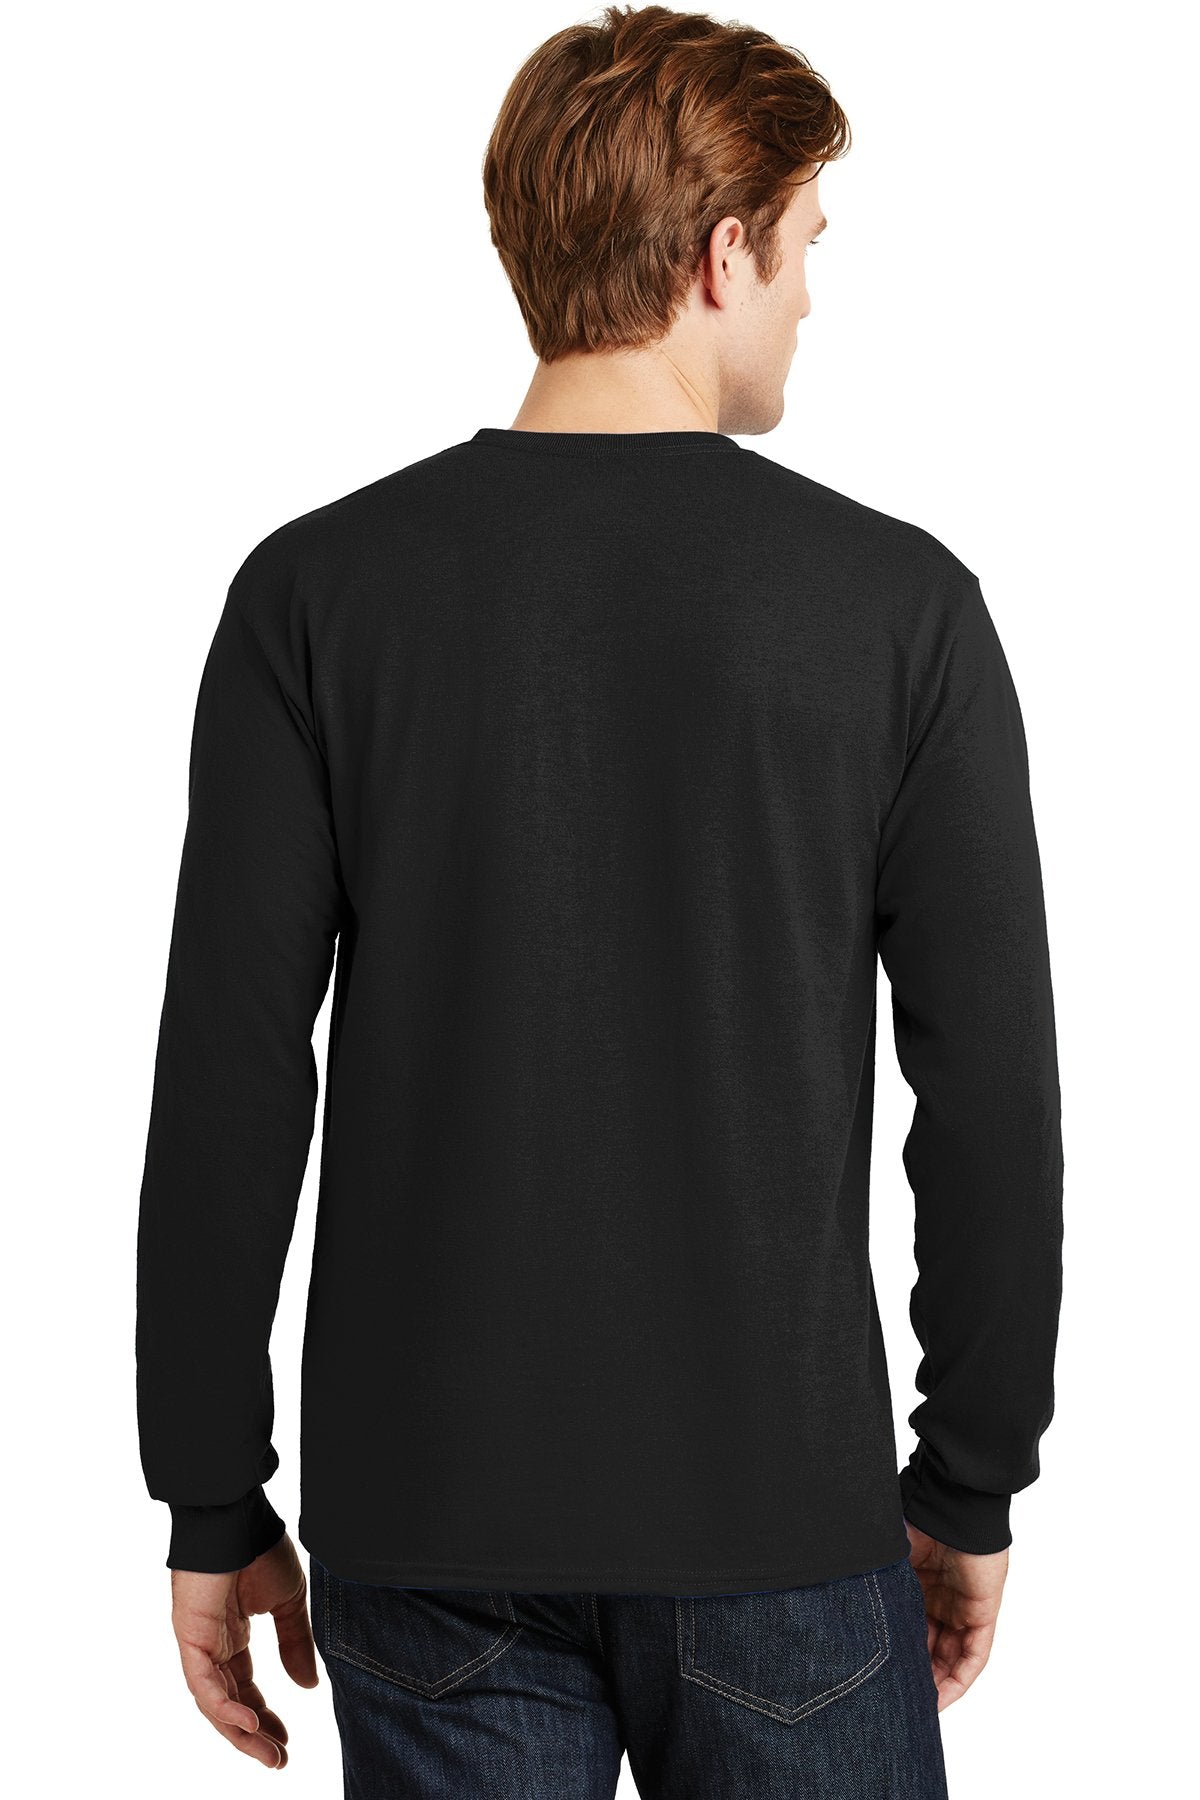 Download Gildan Dryblend Cotton Poly Long Sleeve T Shirt in Black ...